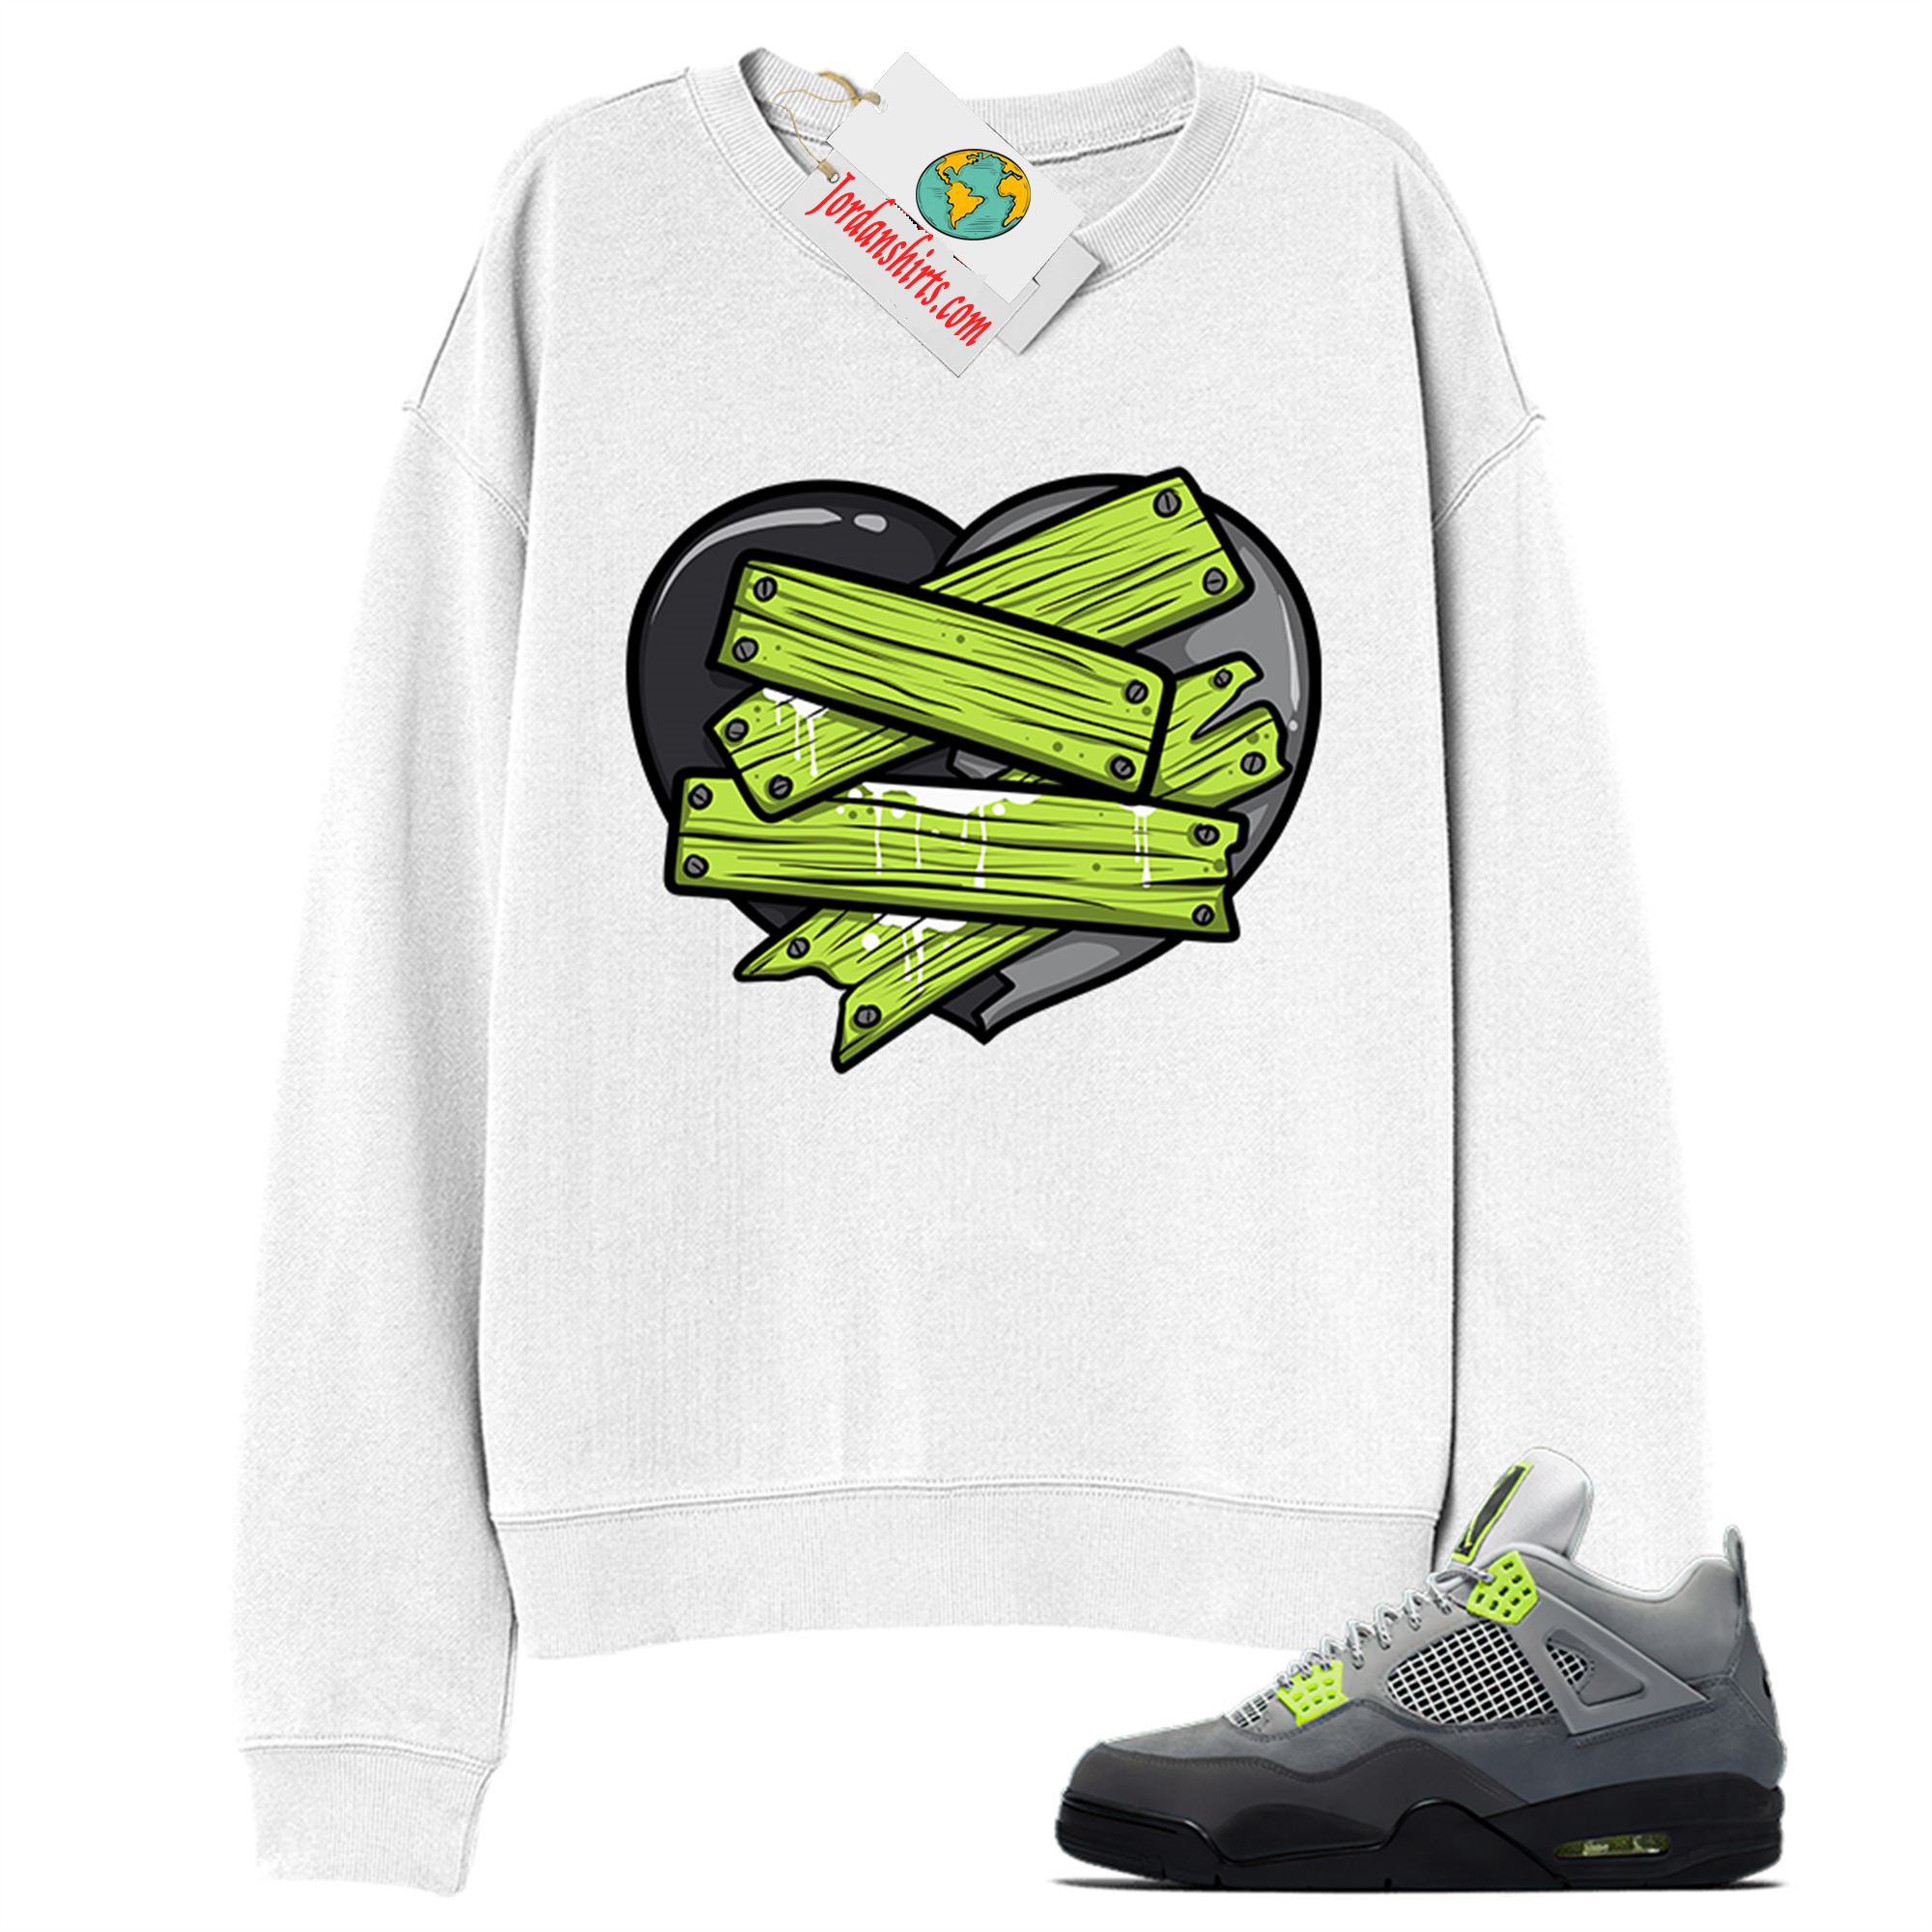 Jordan 4 Sweatshirt, Patch Love Broken Heart White Sweatshirt Air Jordan 4 Neon 95 4s Size Up To 5xl